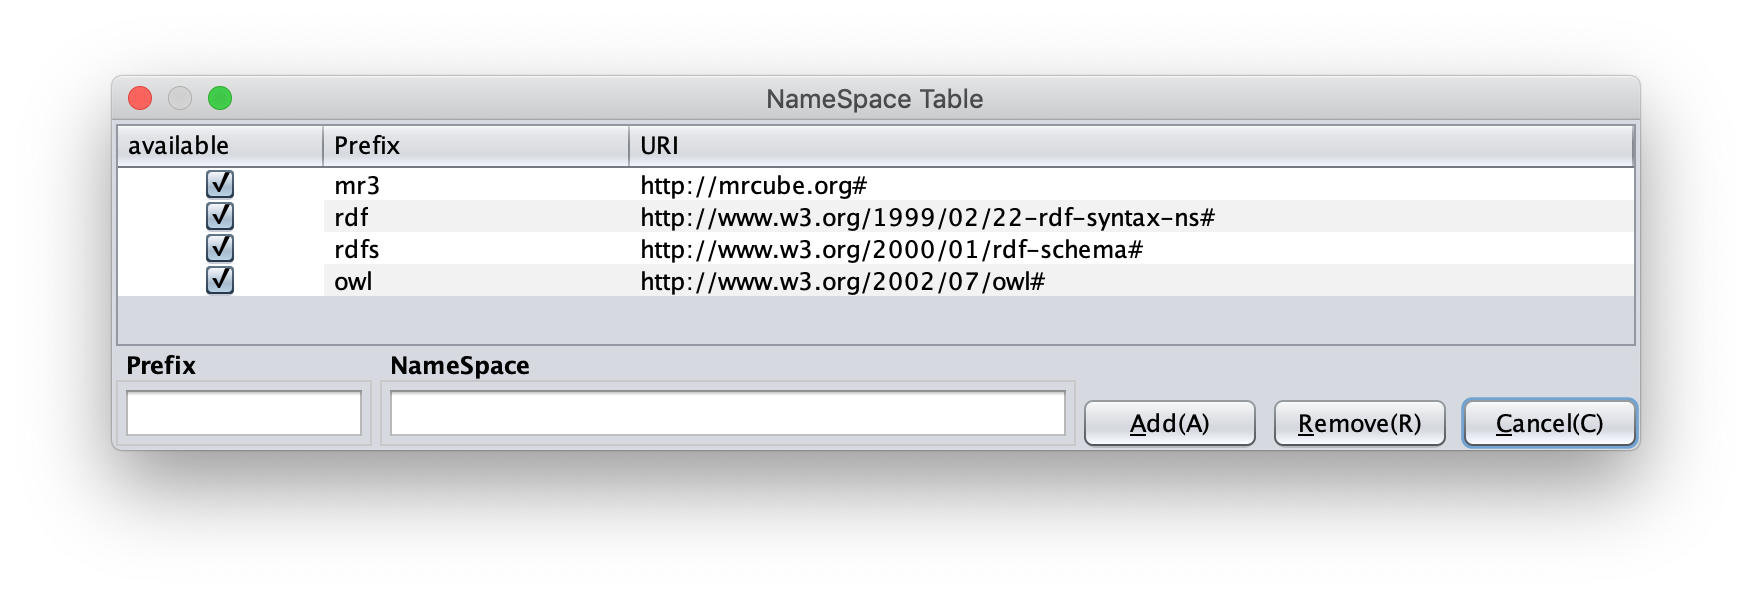 A screenshot of the Namespace Table